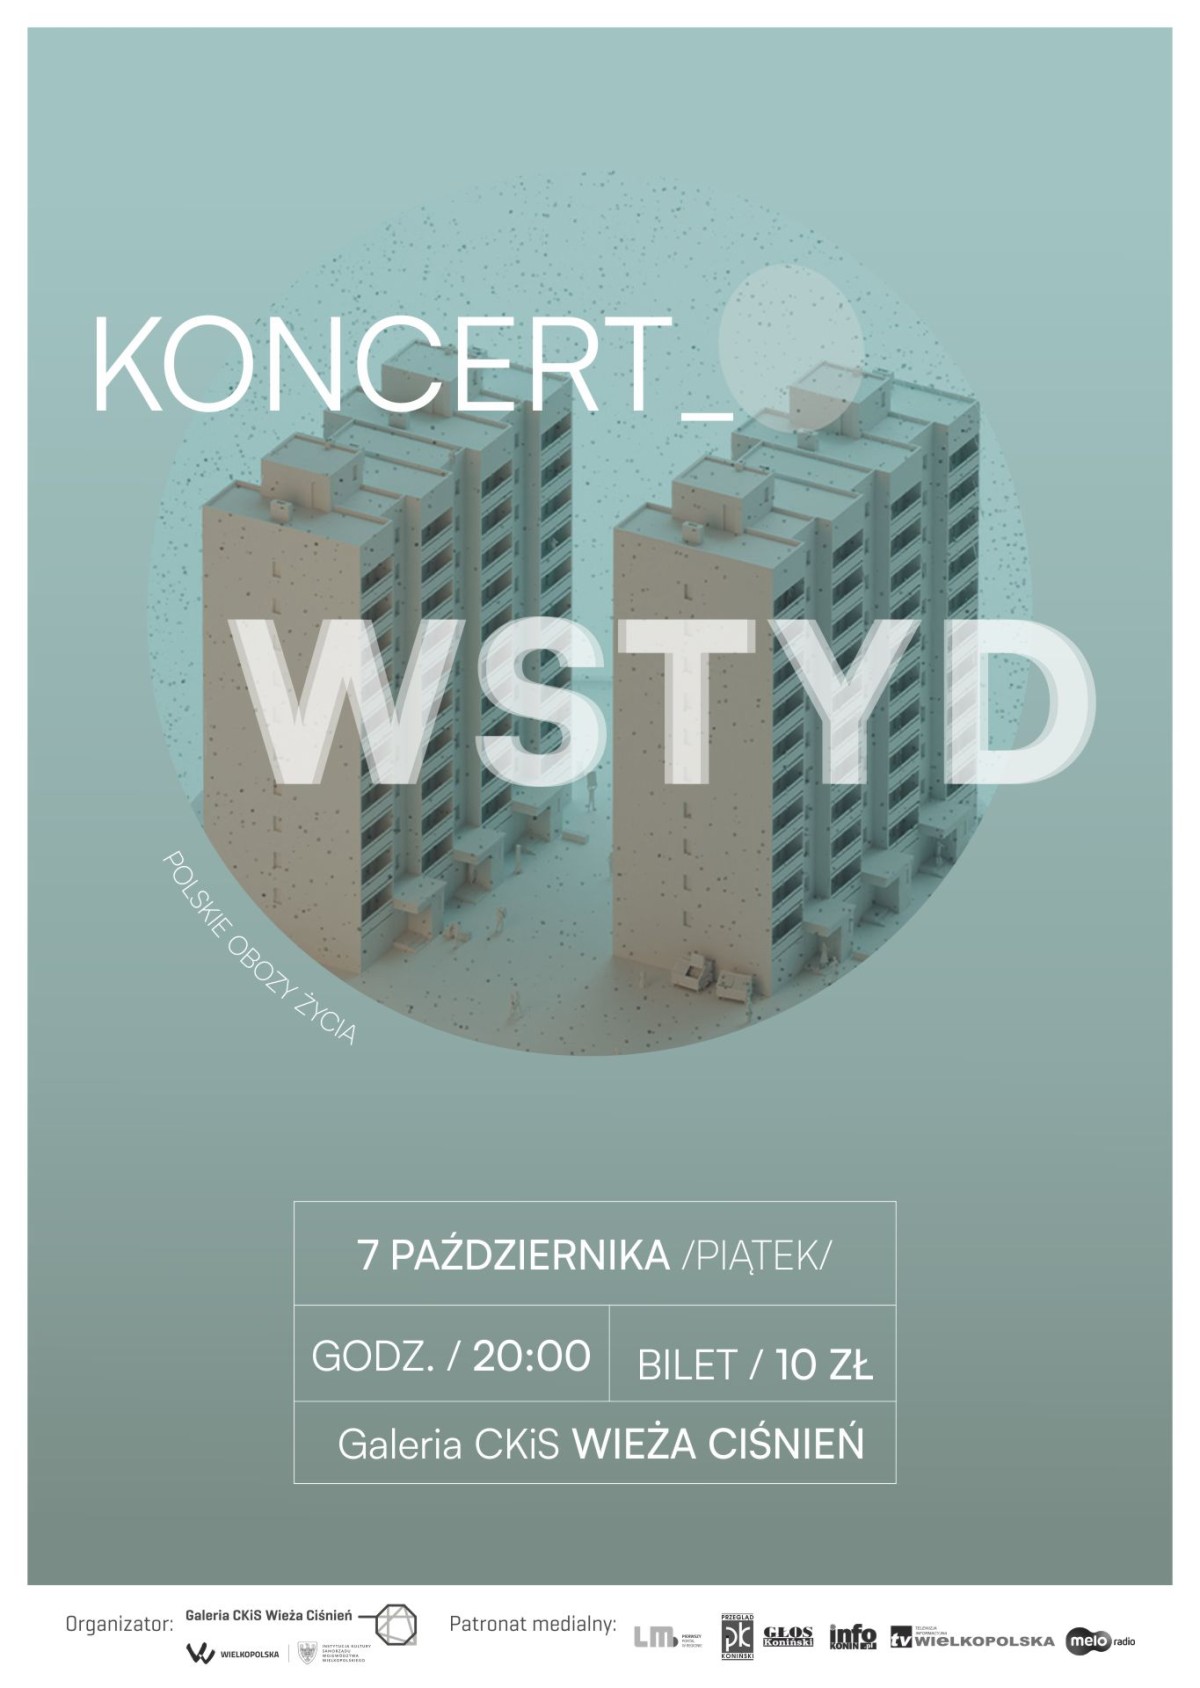 WSTYD - koncert